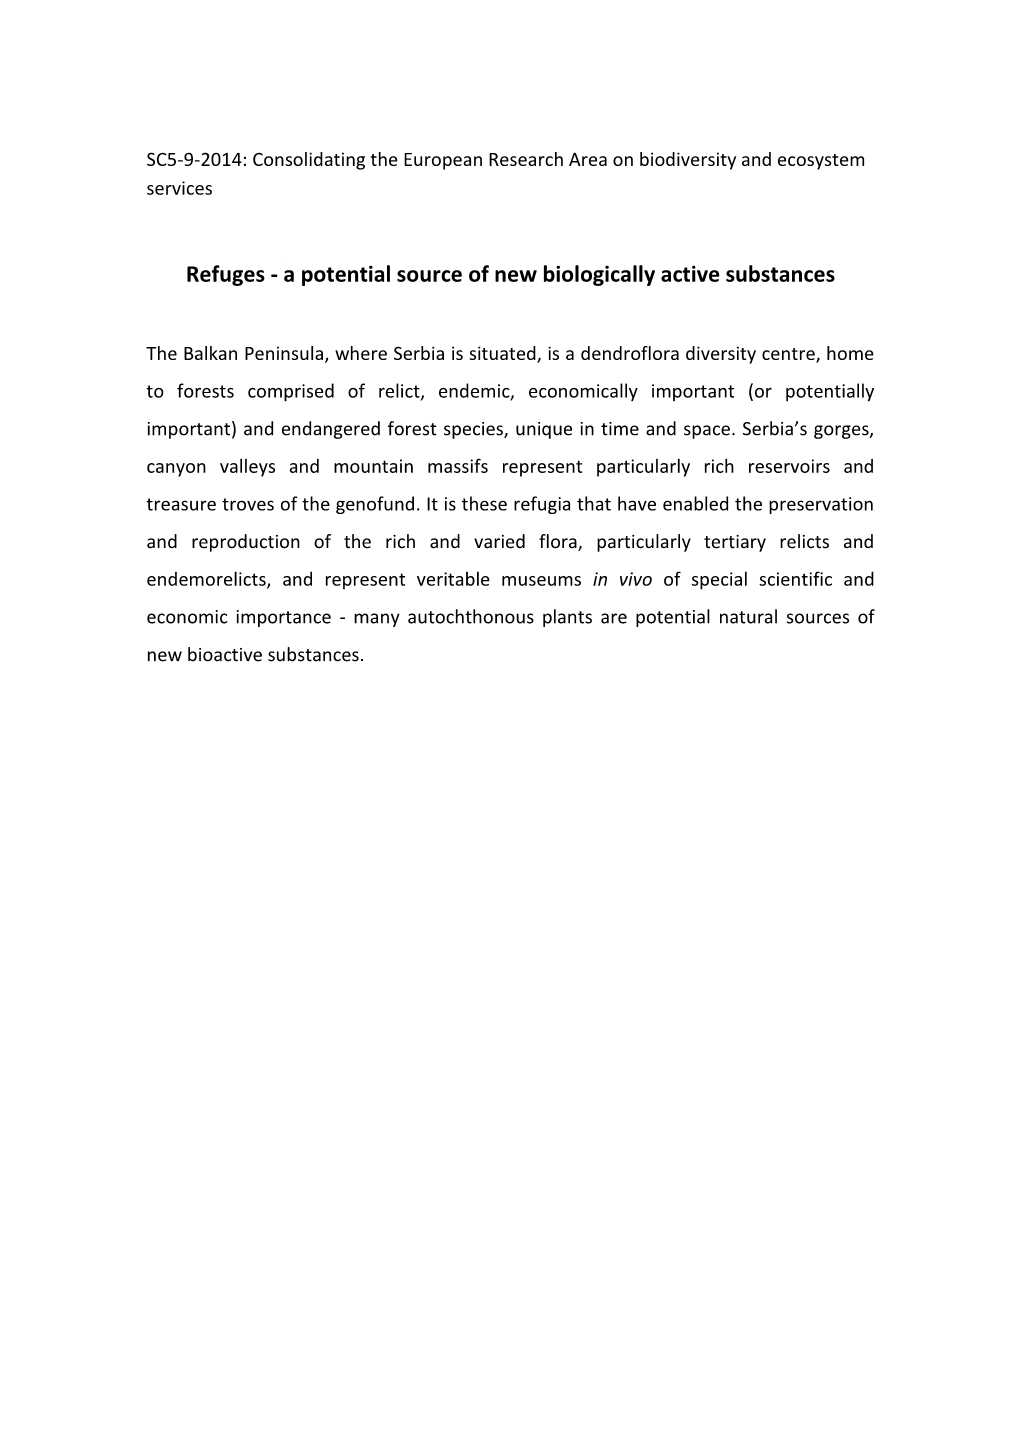 Refuges - a Potential Source of New Biologically Active Substances